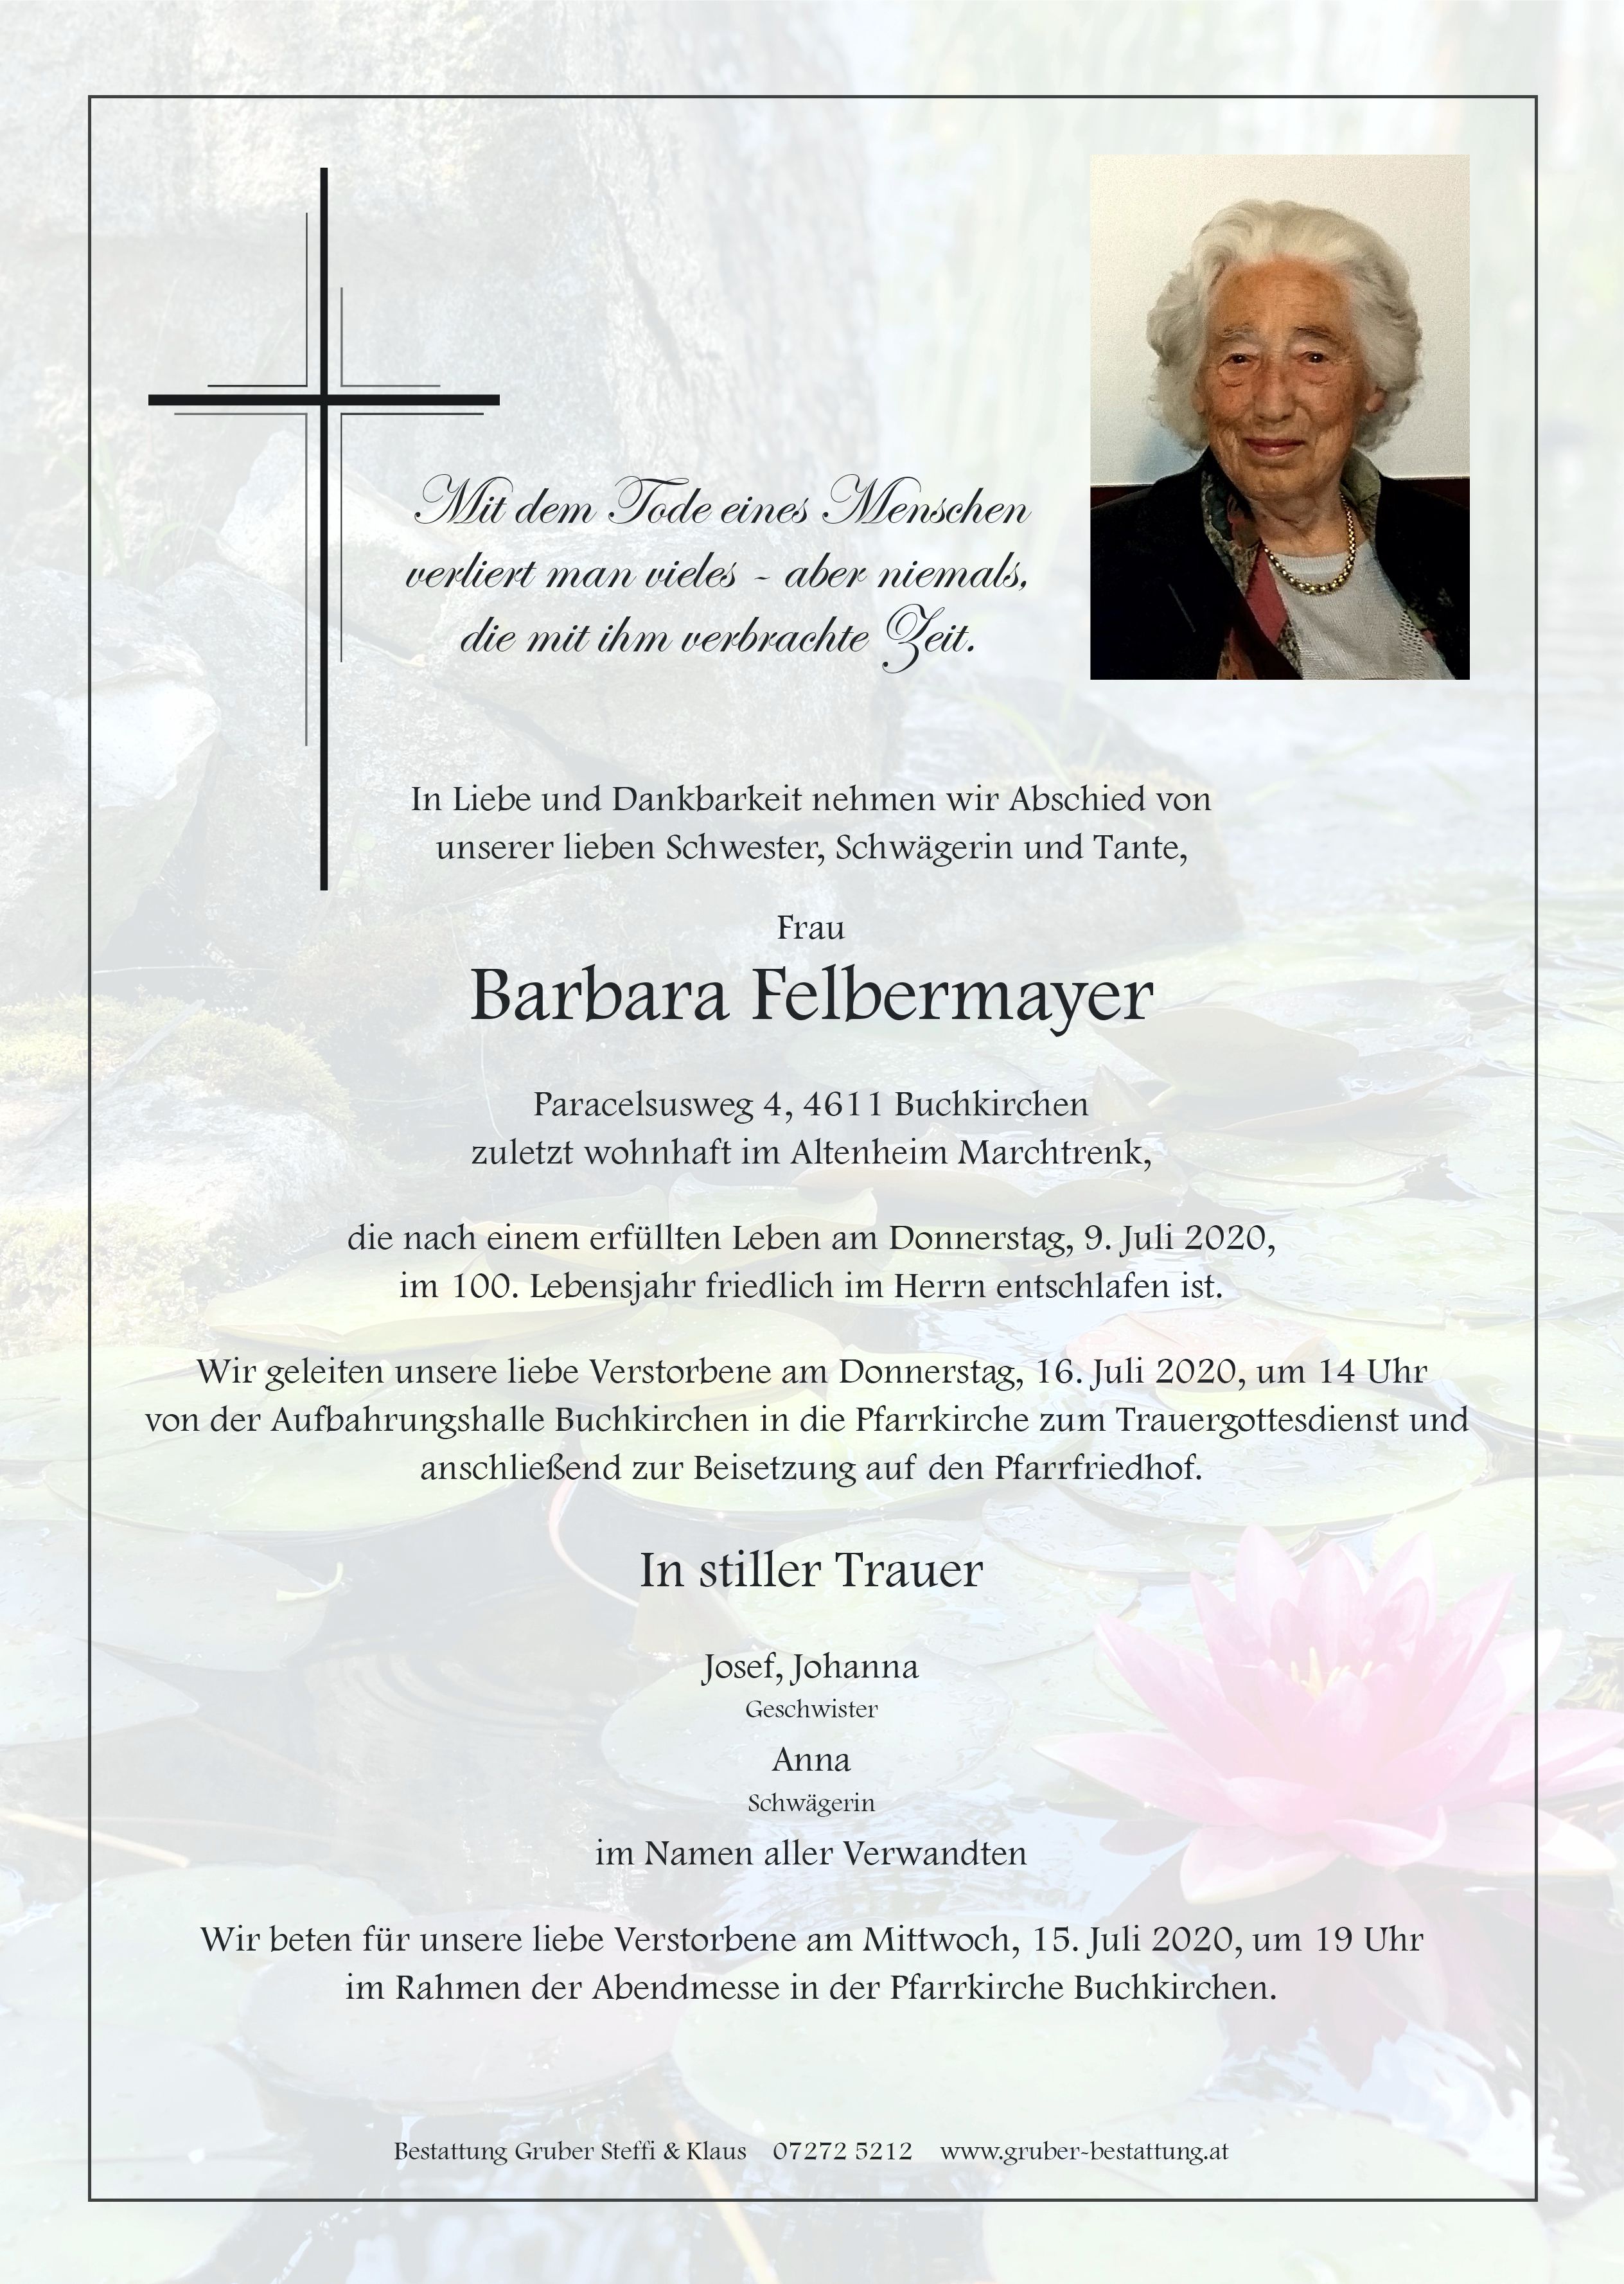 Barbara Felbermayer (Buchkirchen)